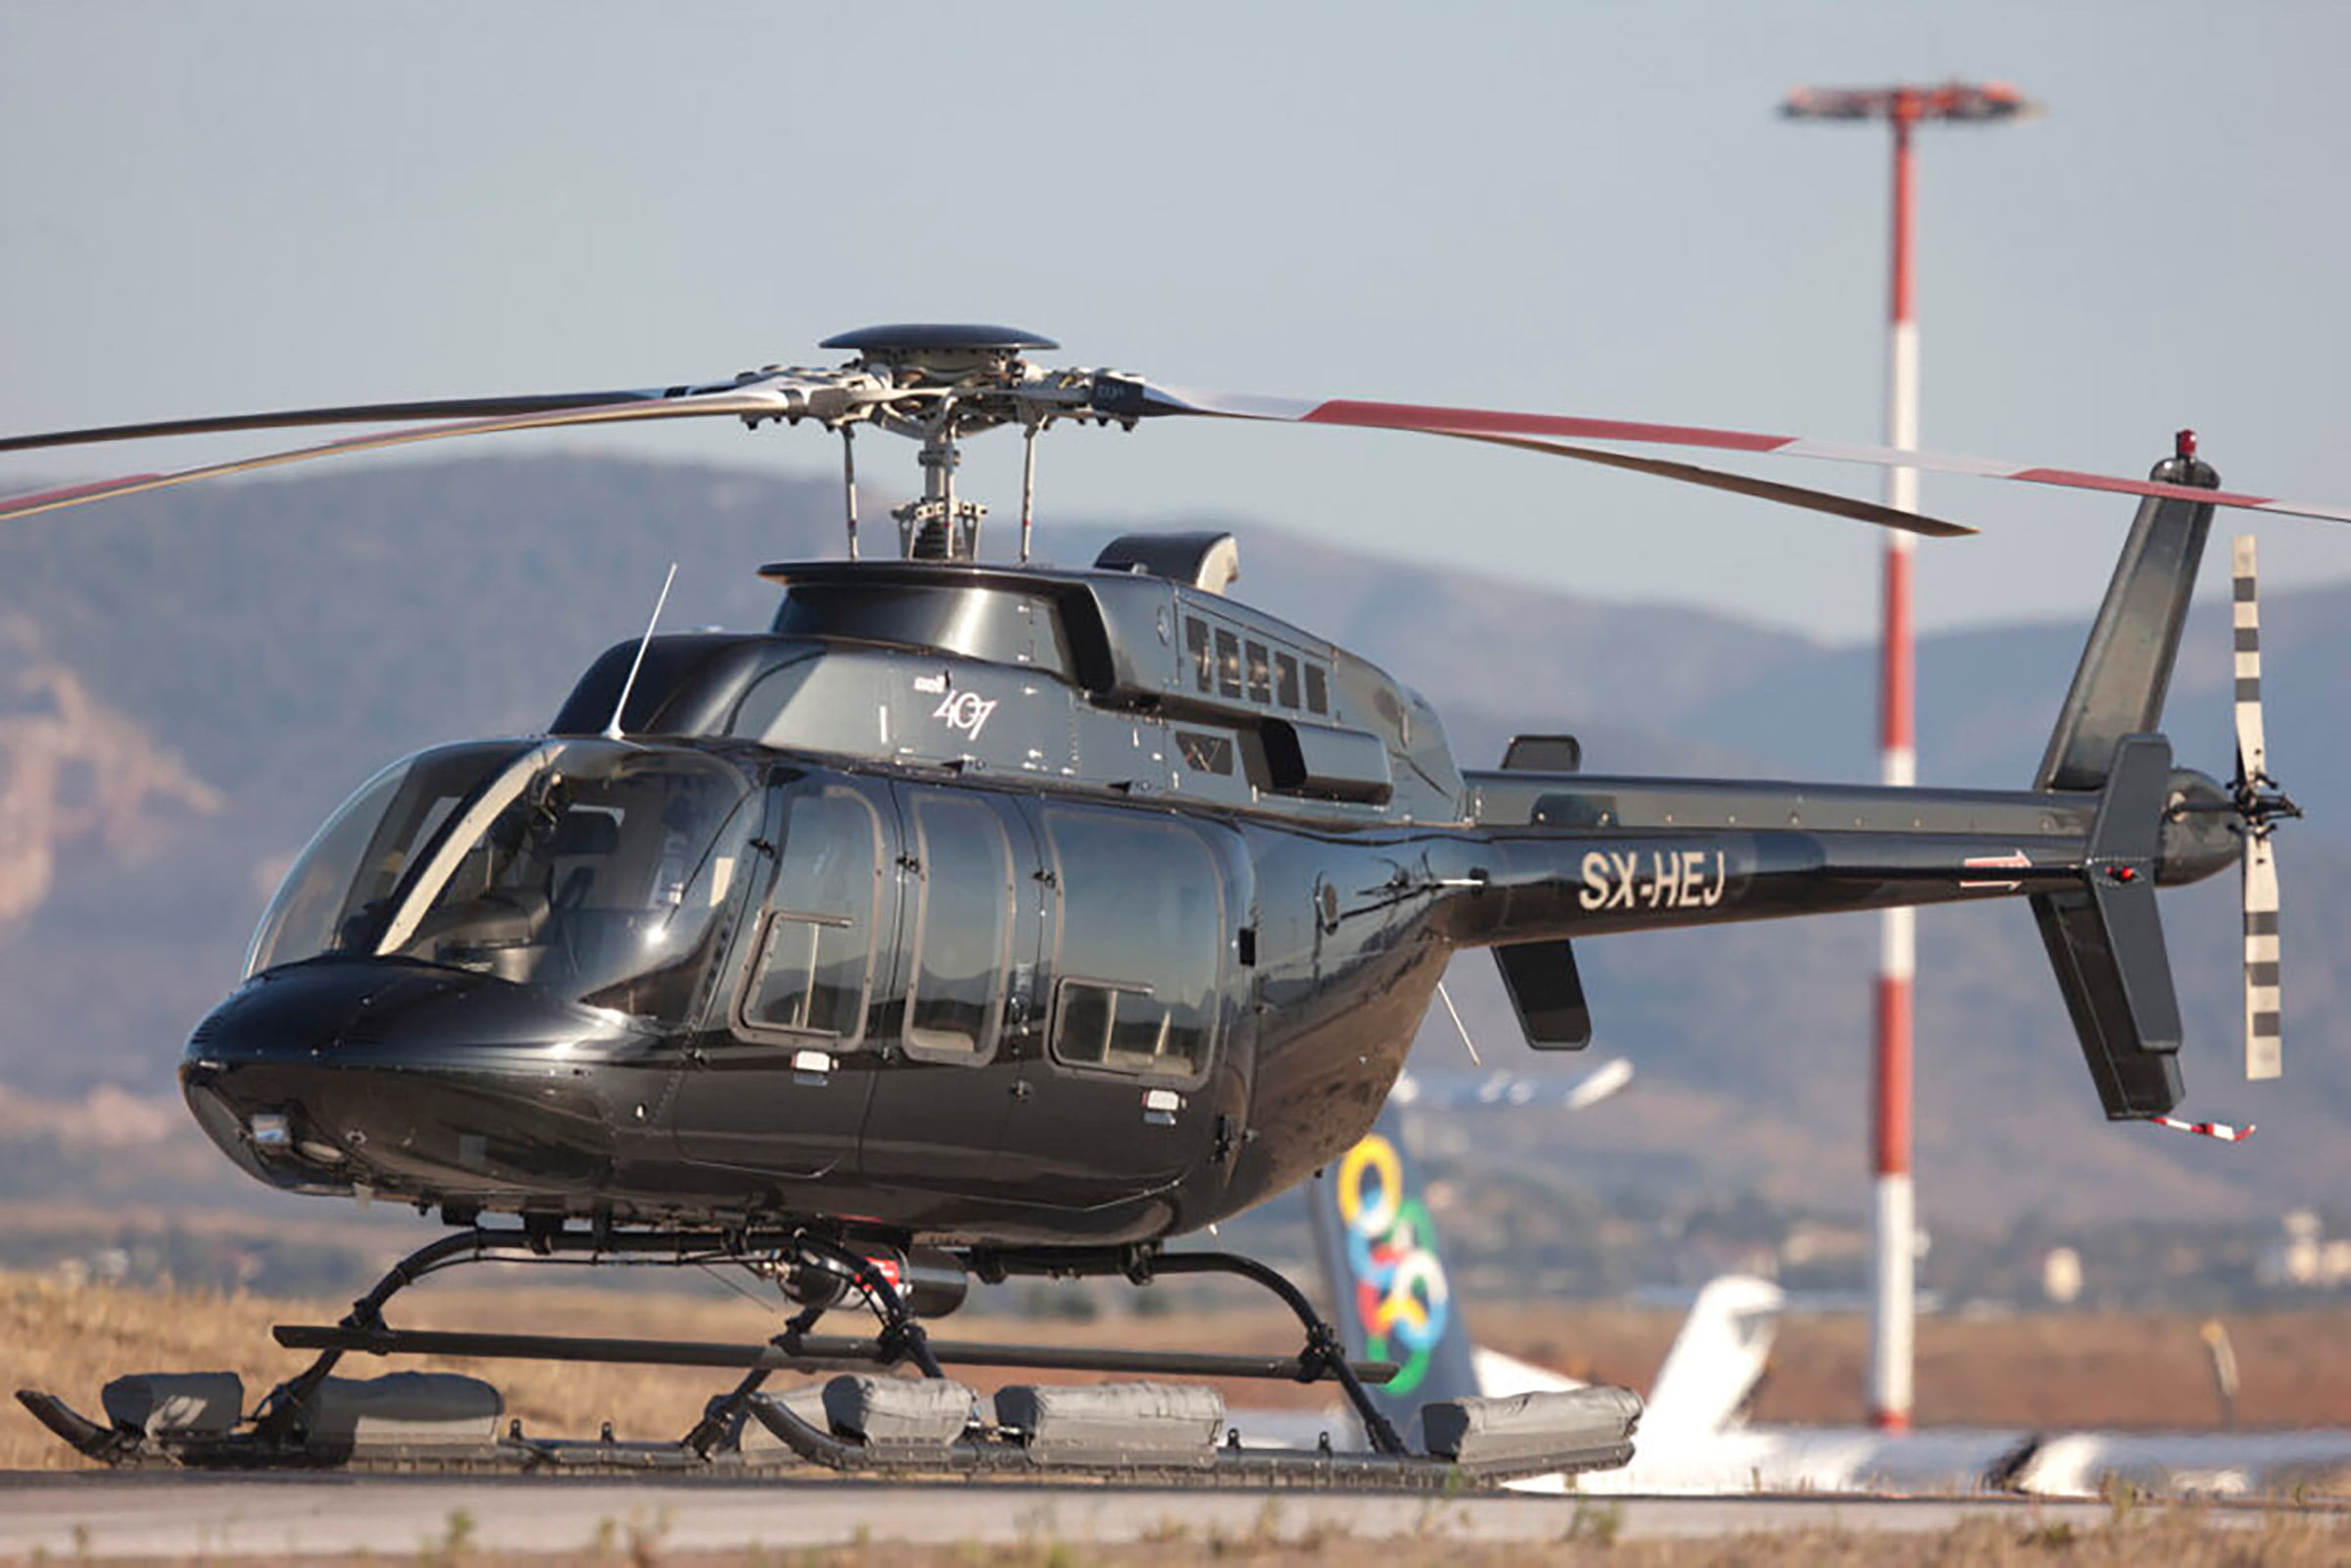 Bell 407 SX-HEJ